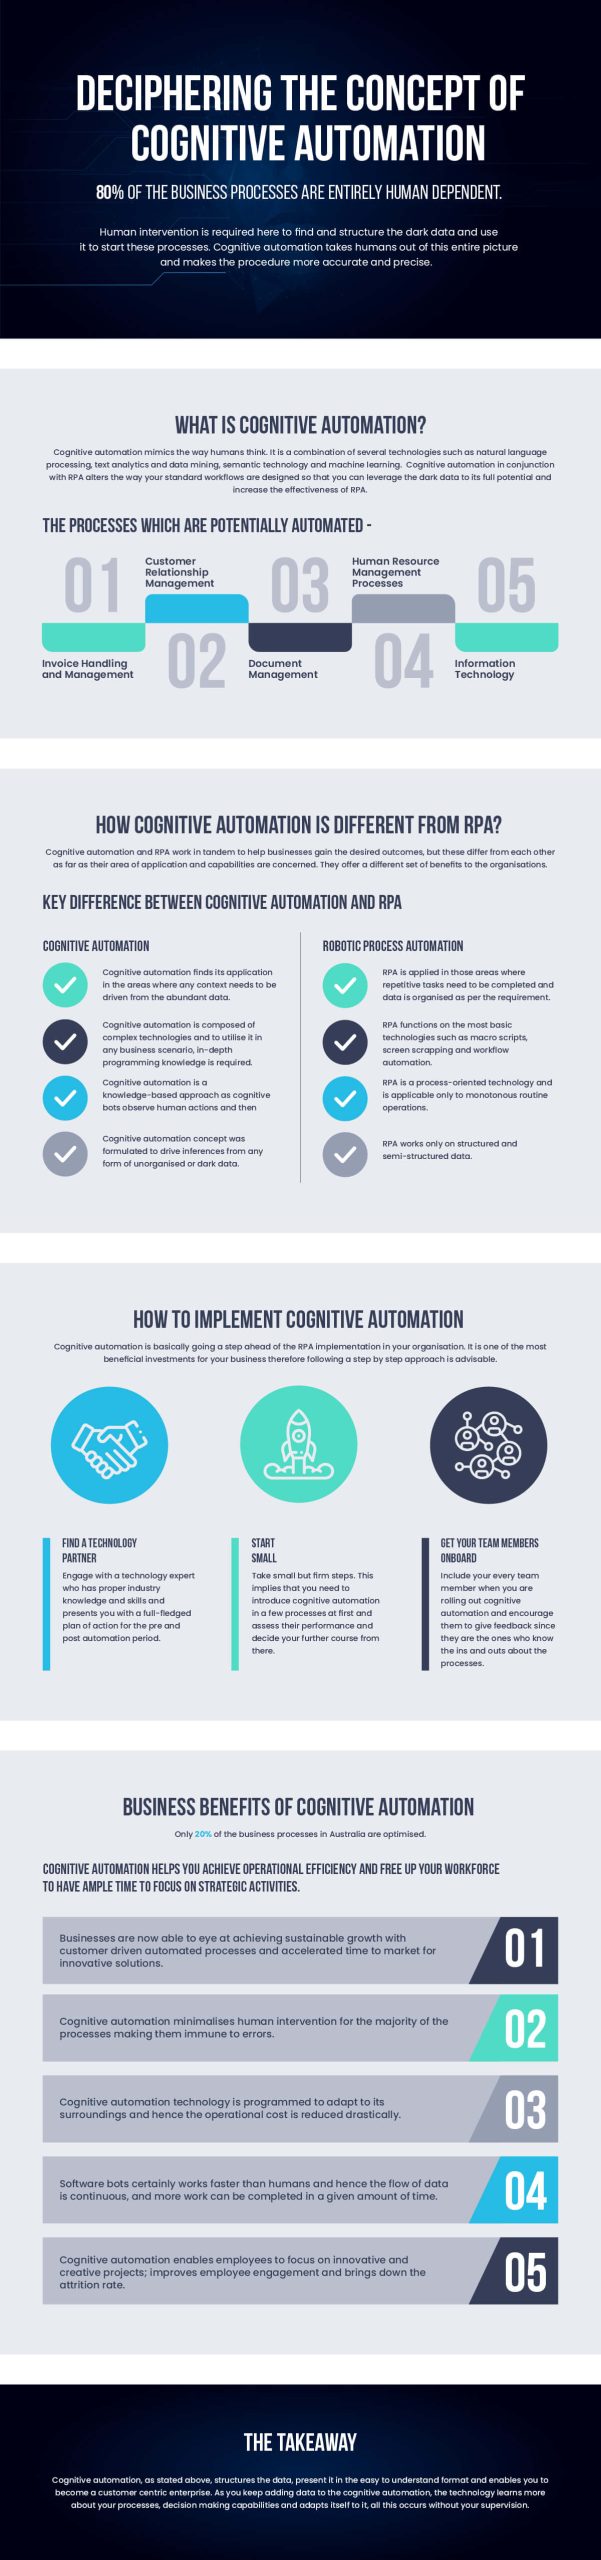 cognitive automation – a decision engine for robotic process automation efforts 